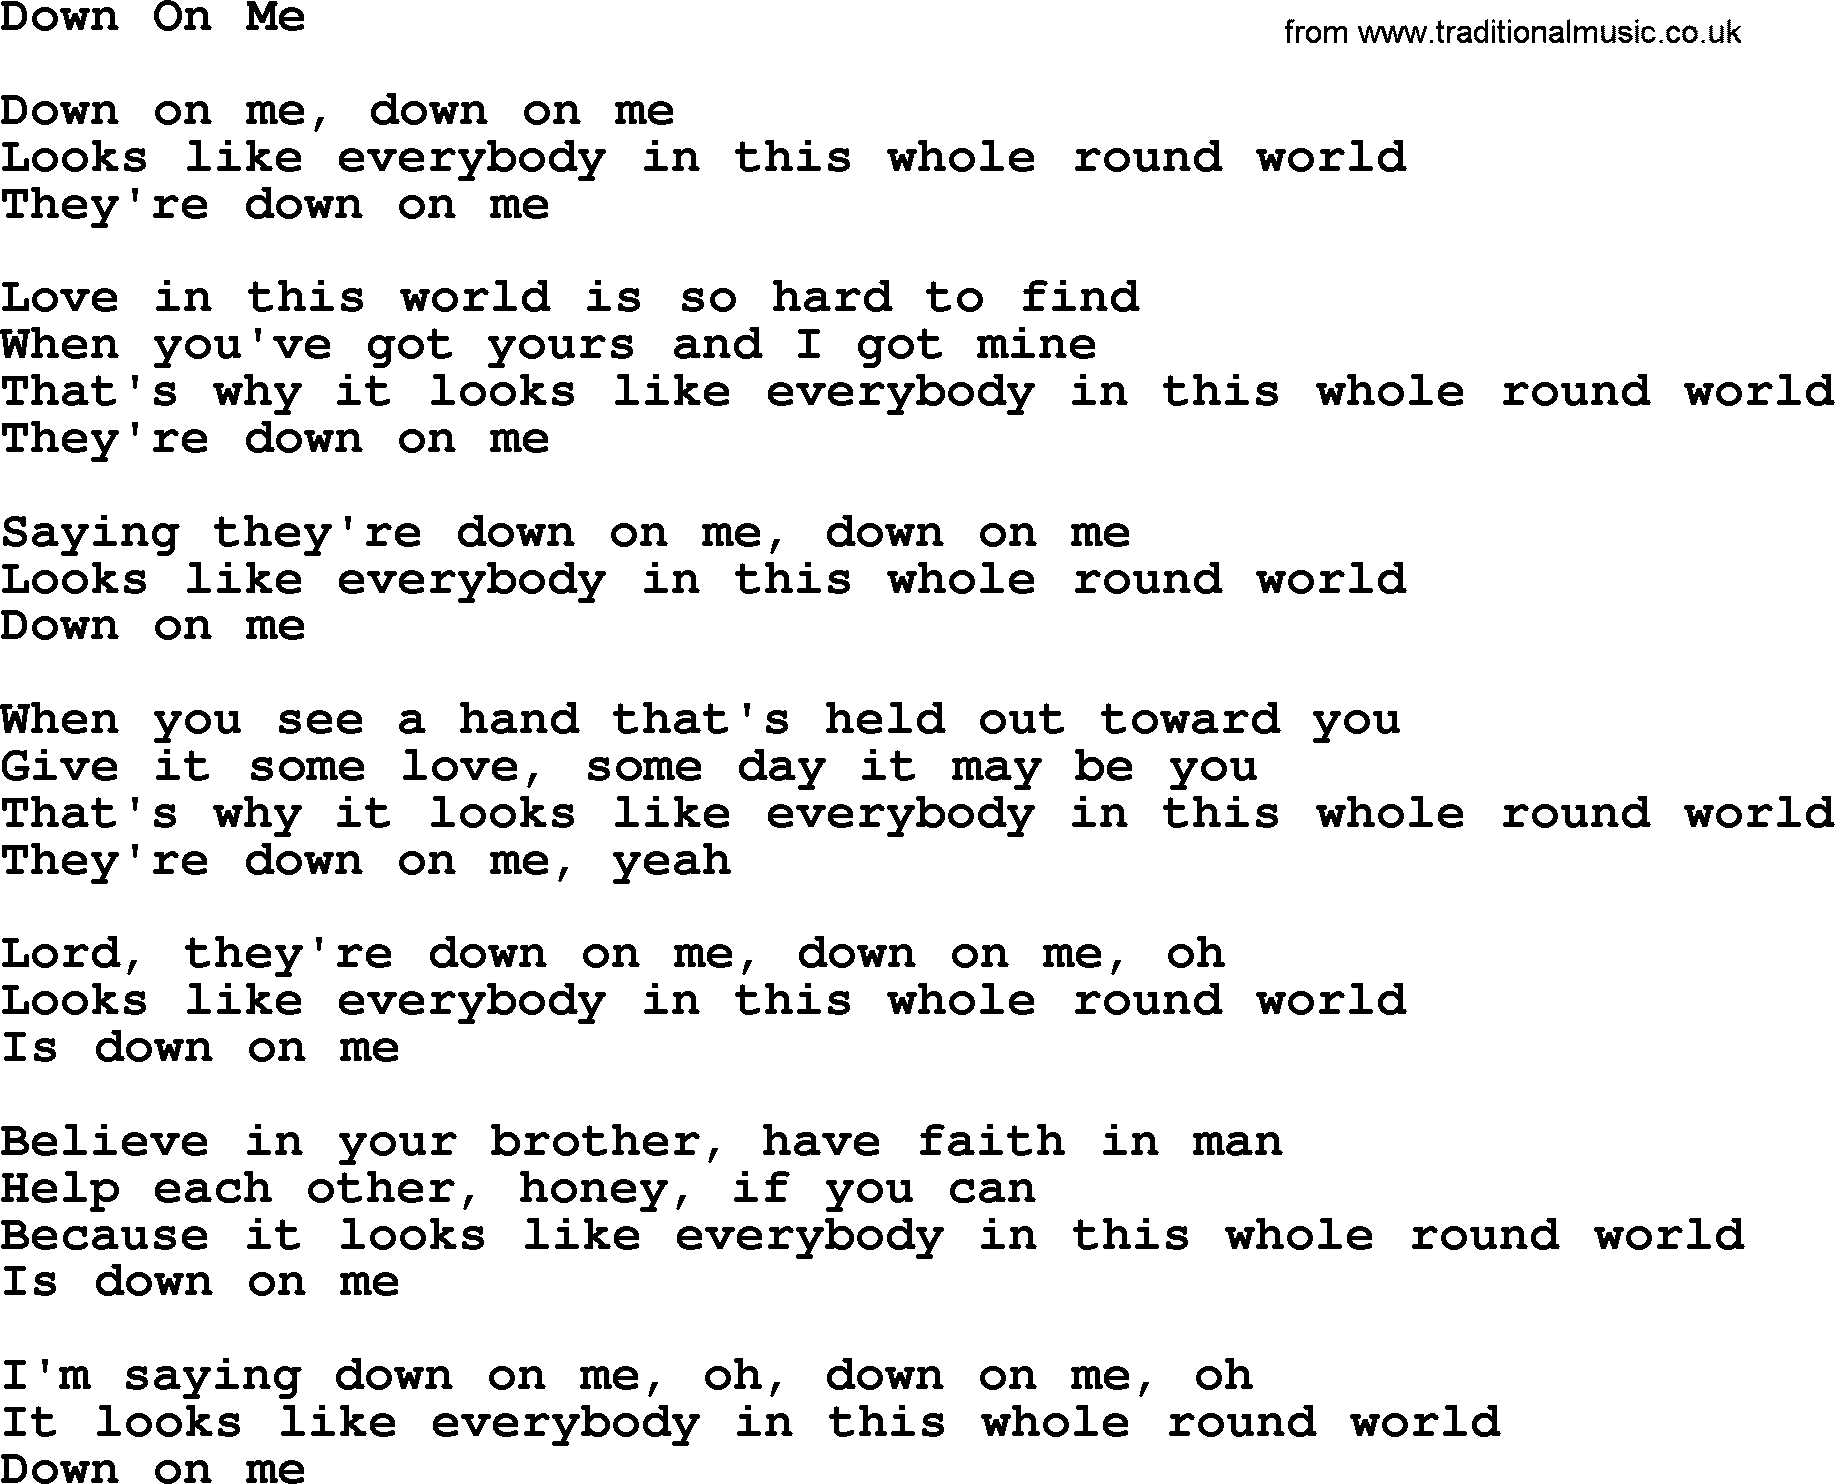 The Byrds song Down On Me, lyrics